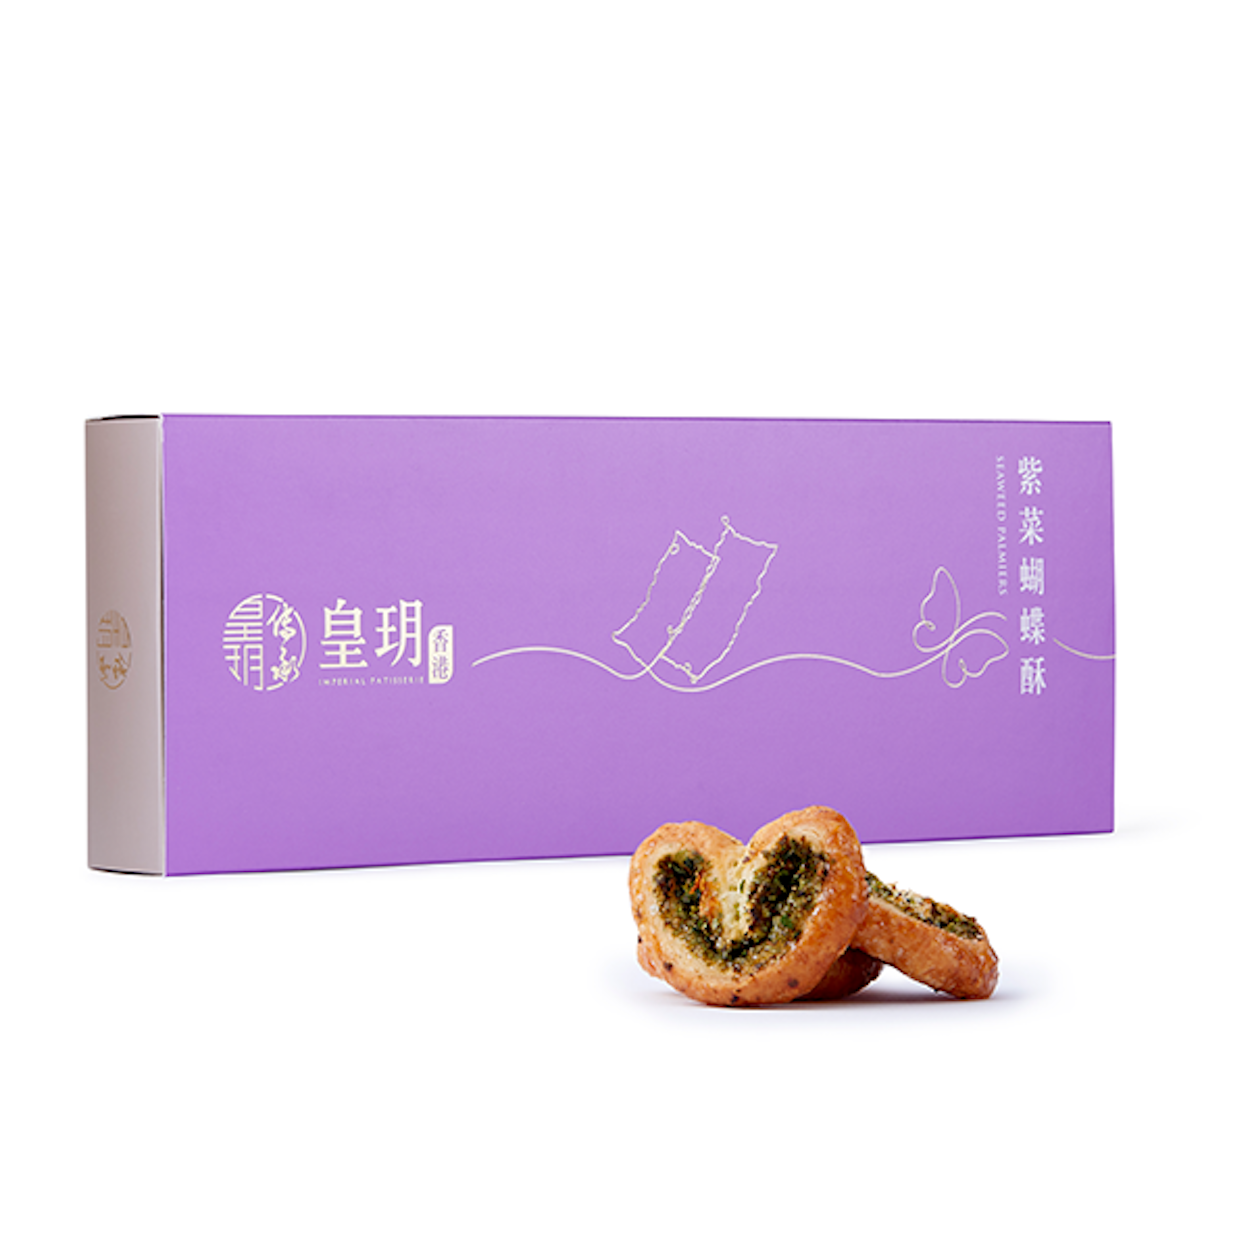 Imperial Patisserie Seaweed Palmiers Delight Gift Set 皇玥 紫菜蝴蝶酥精裝禮盒